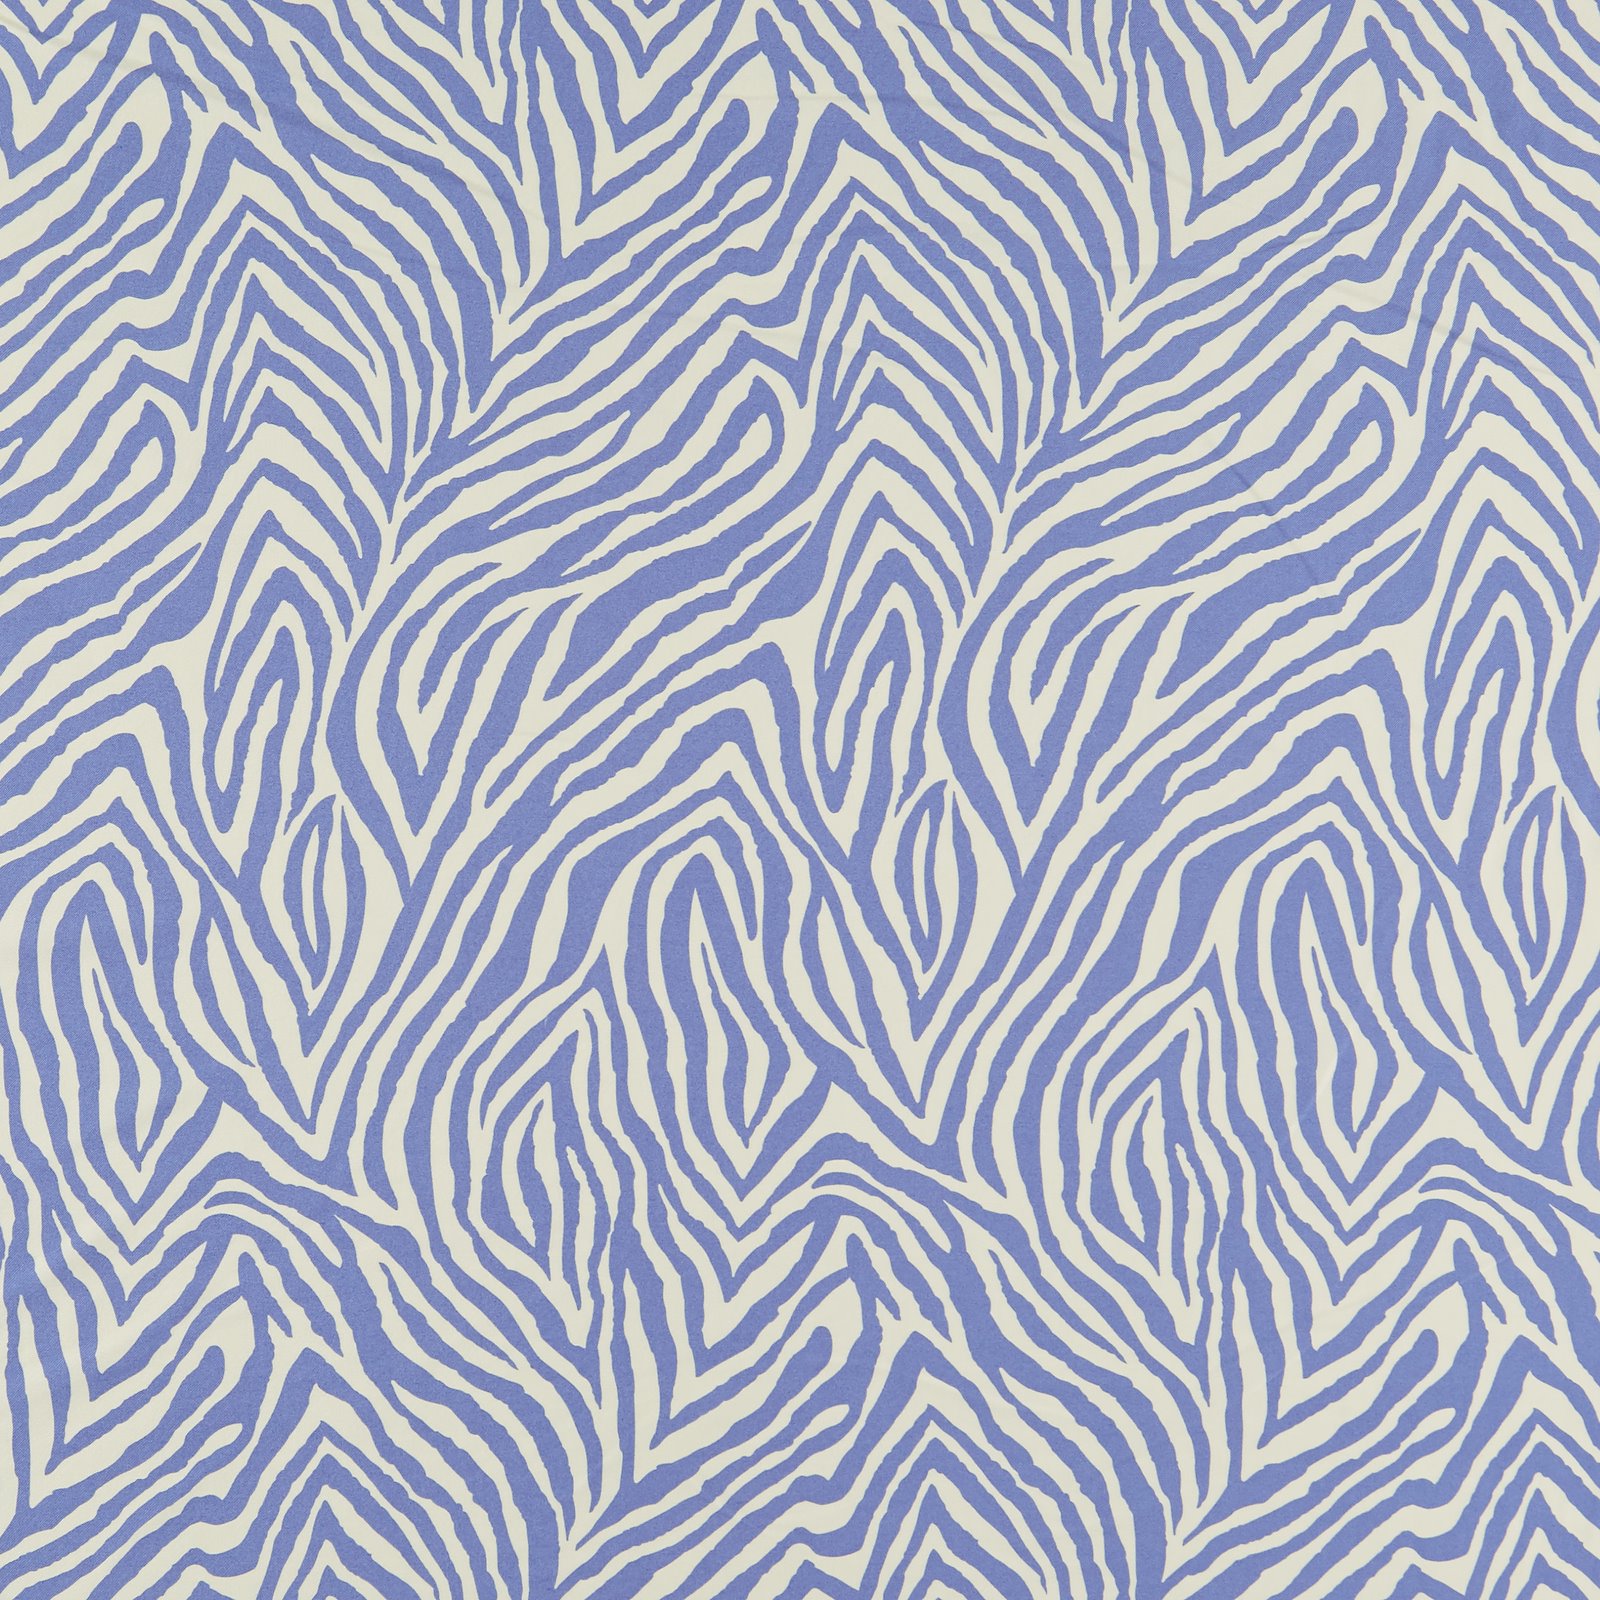 Woven viscose twill w blue zebra print 521140_pack_sp